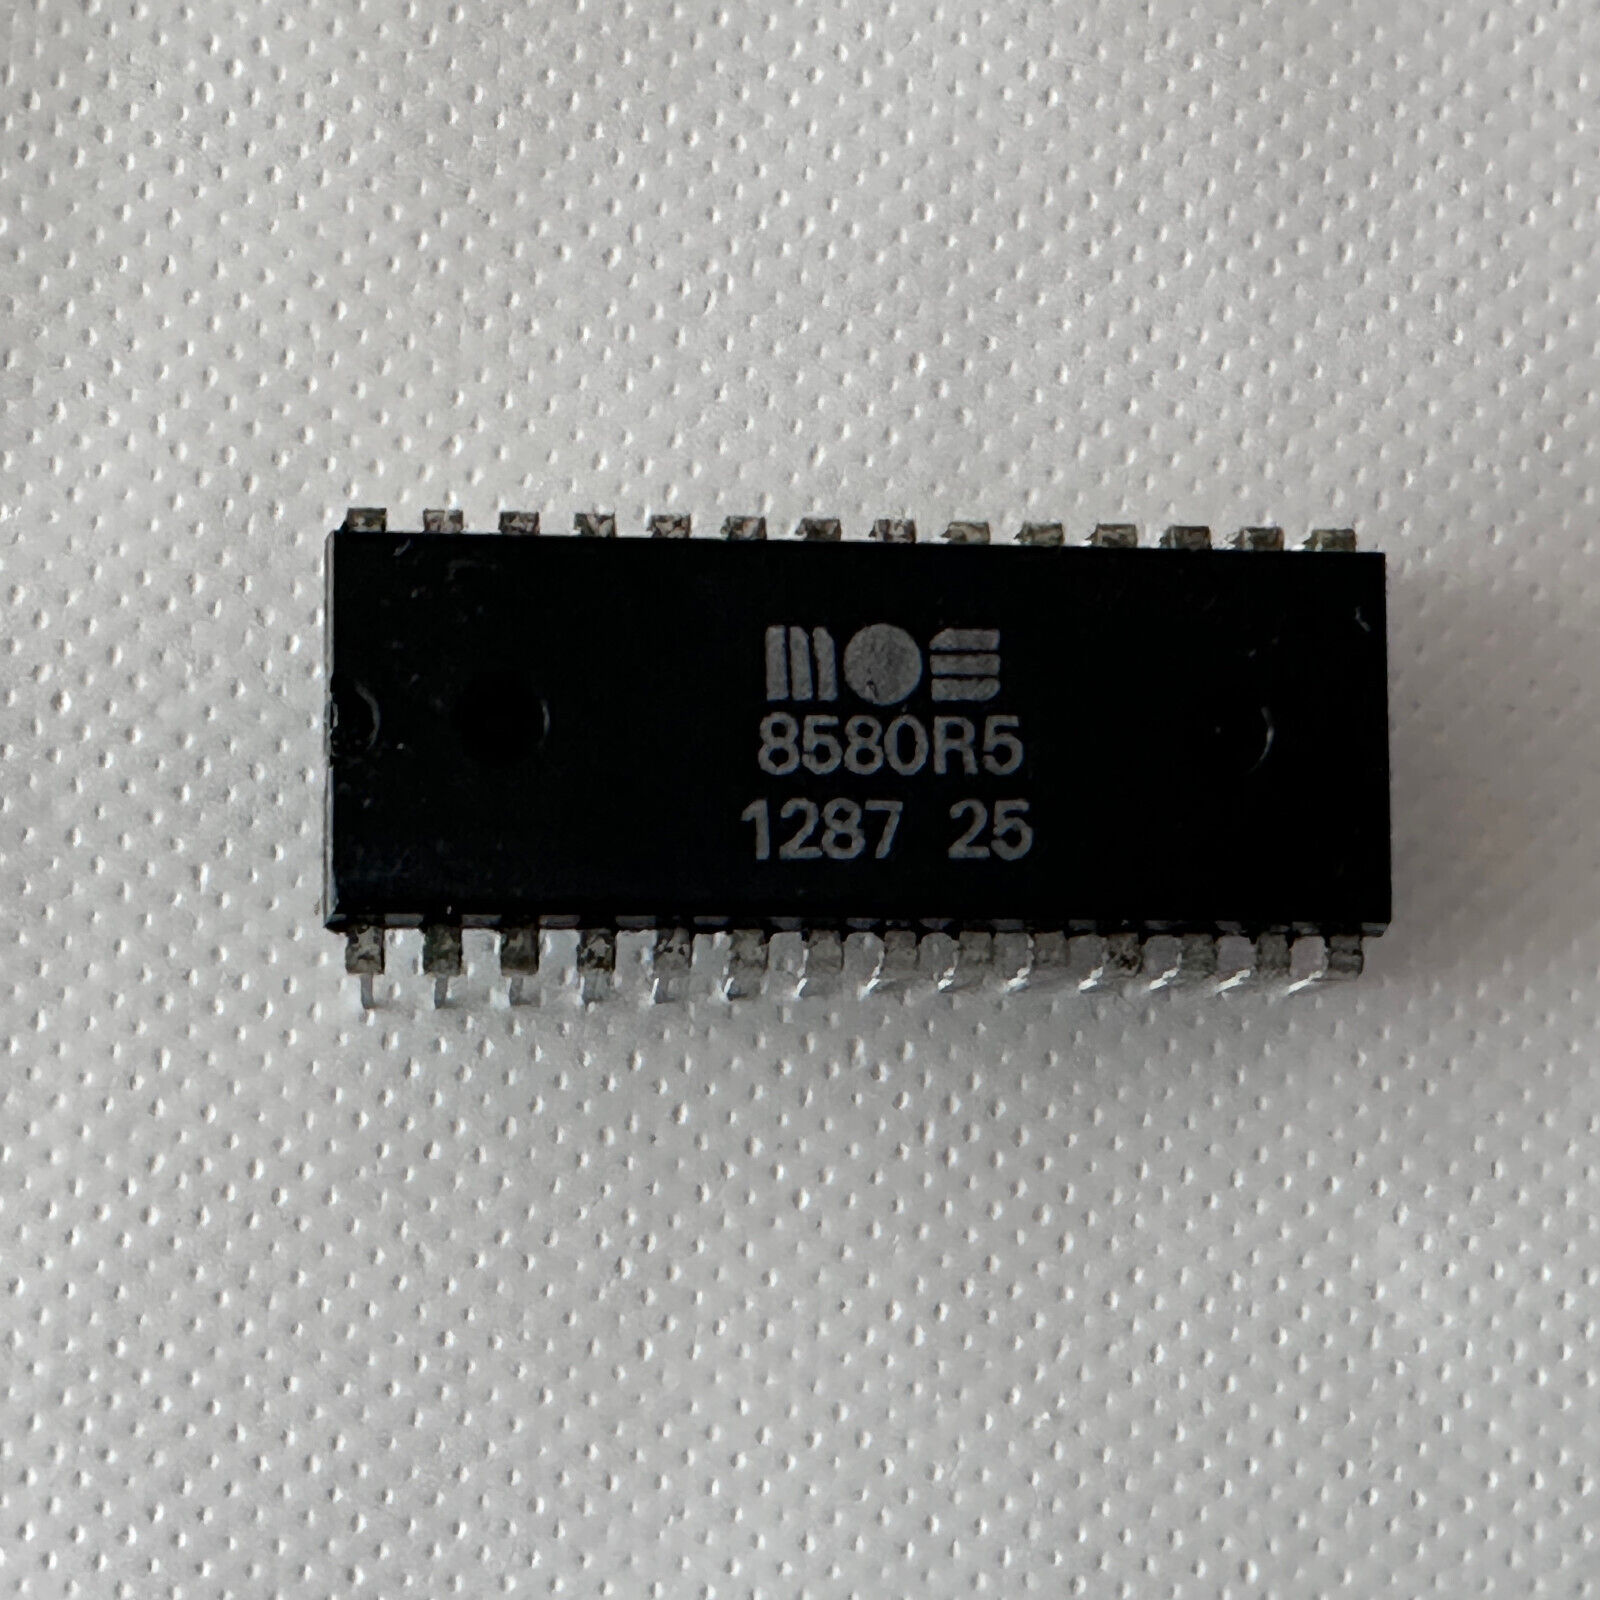 8580R5 Chip Ic Csg / Mos Sid Soundchip, Commodore C64 #12 87